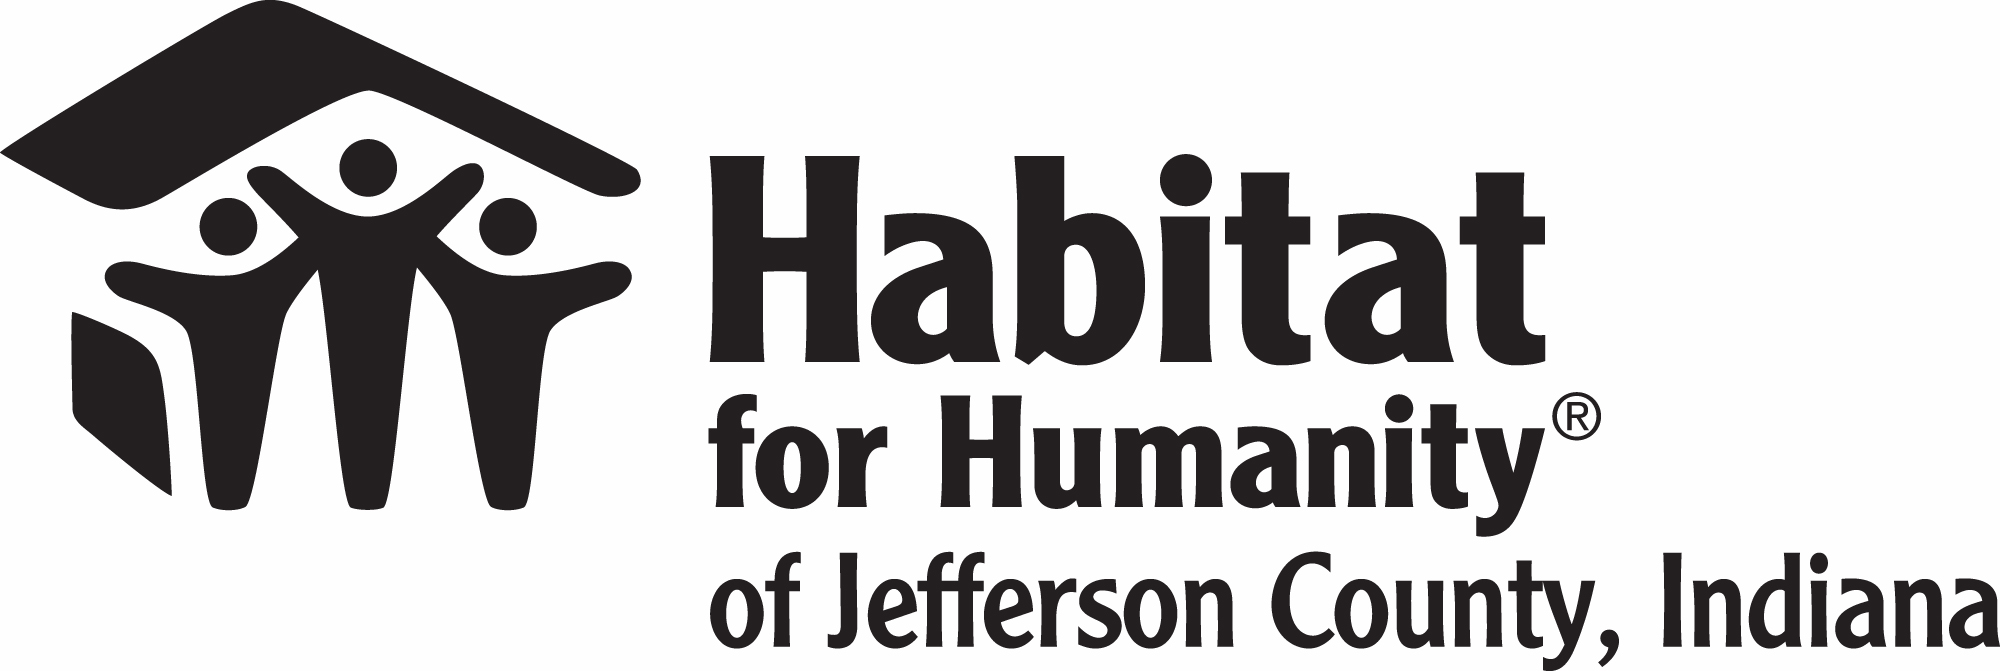 Habitat for Humanity of Jefferson County, Indiana logo